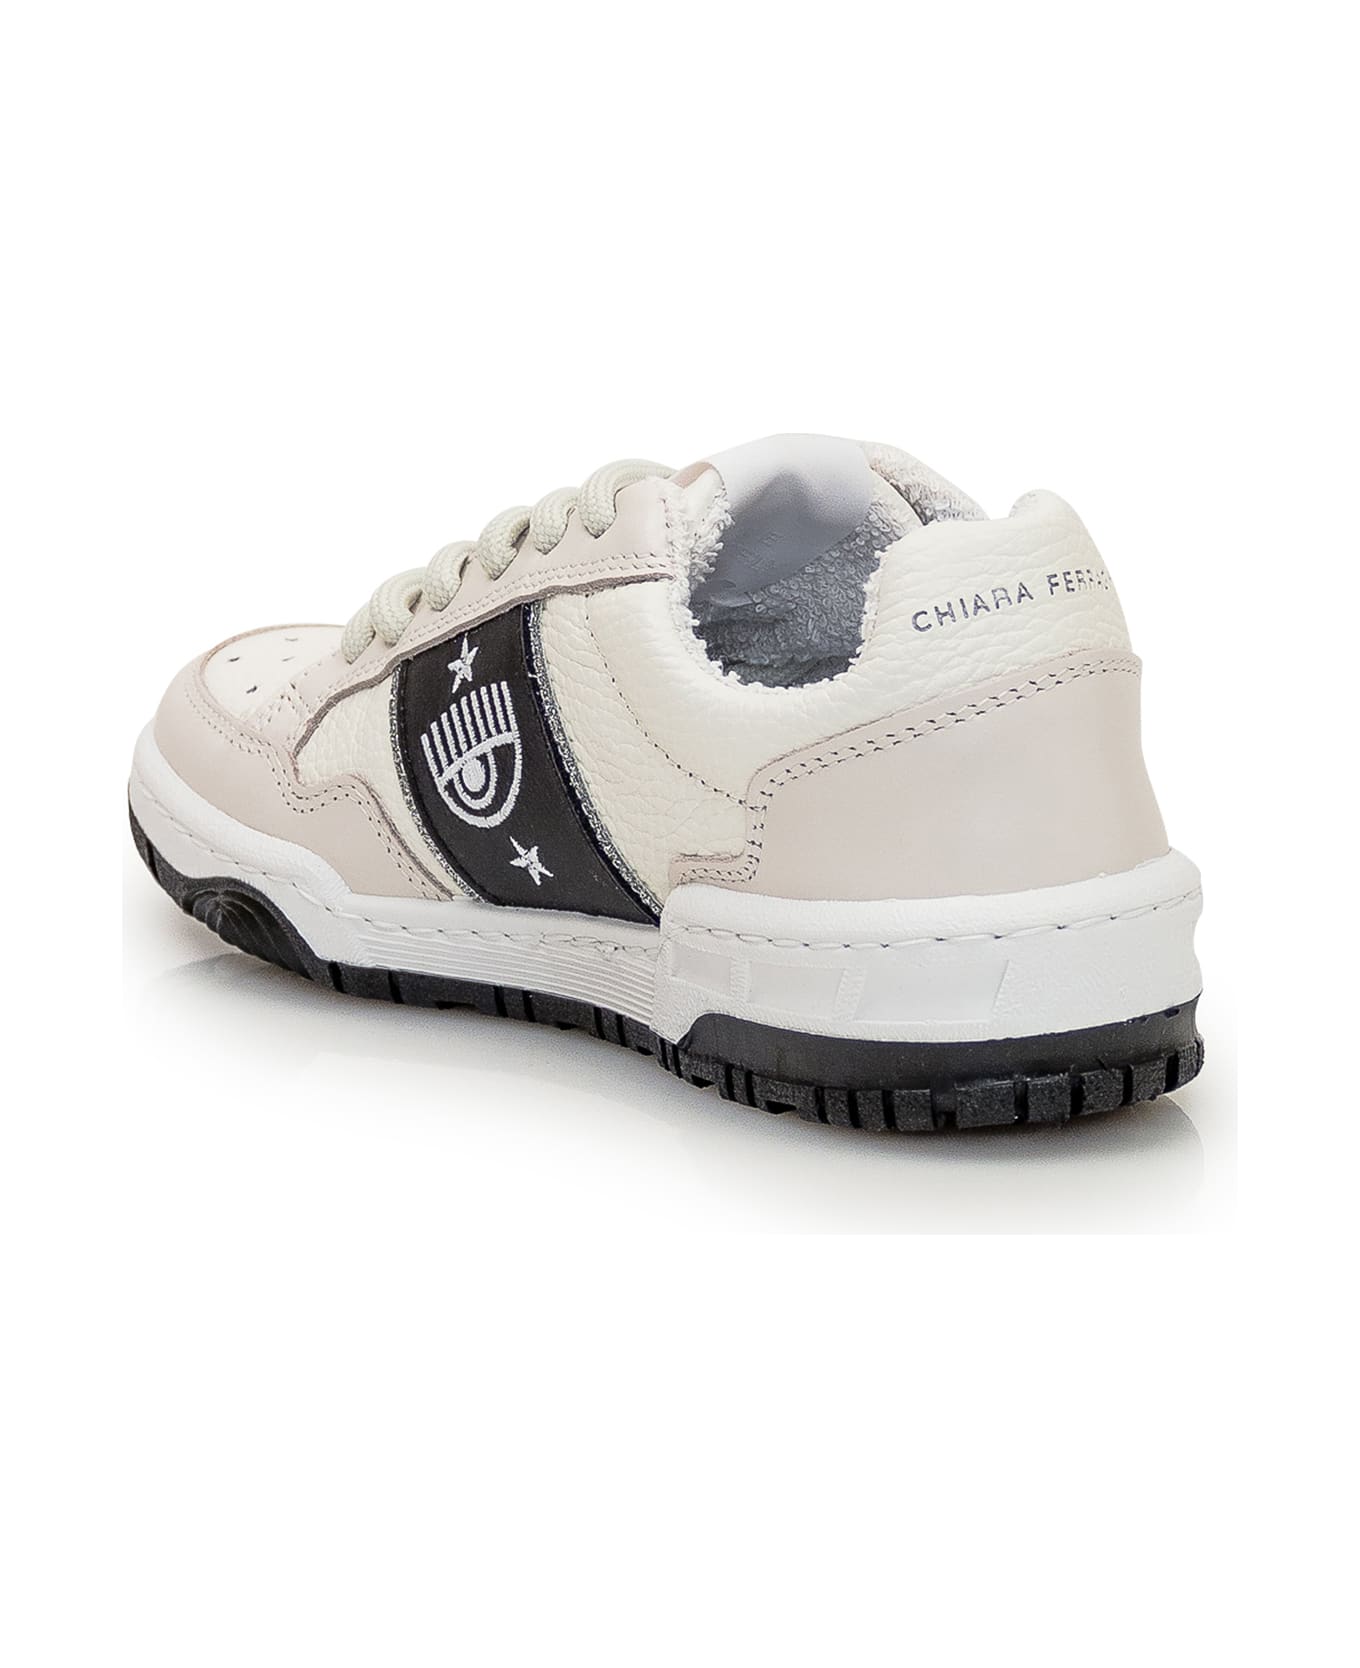 Chiara Ferragni Cf-1 Sneaker - WHITE-BLACK スニーカー